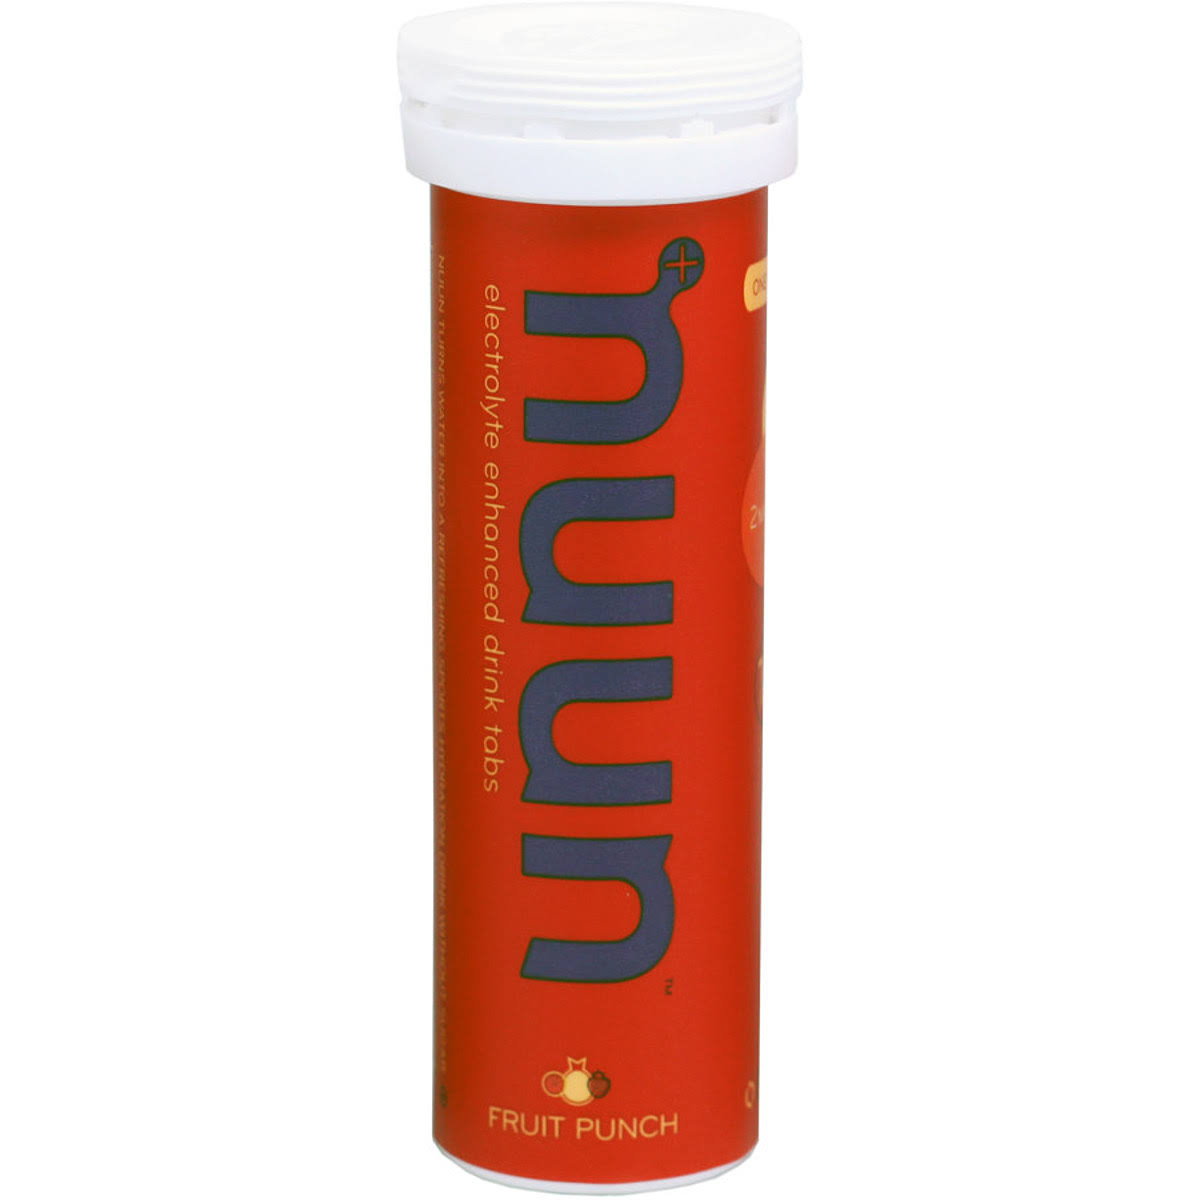 Nuun Electrolyte Enhanced Drink Tabs - Fruit Punch, x12 tabs